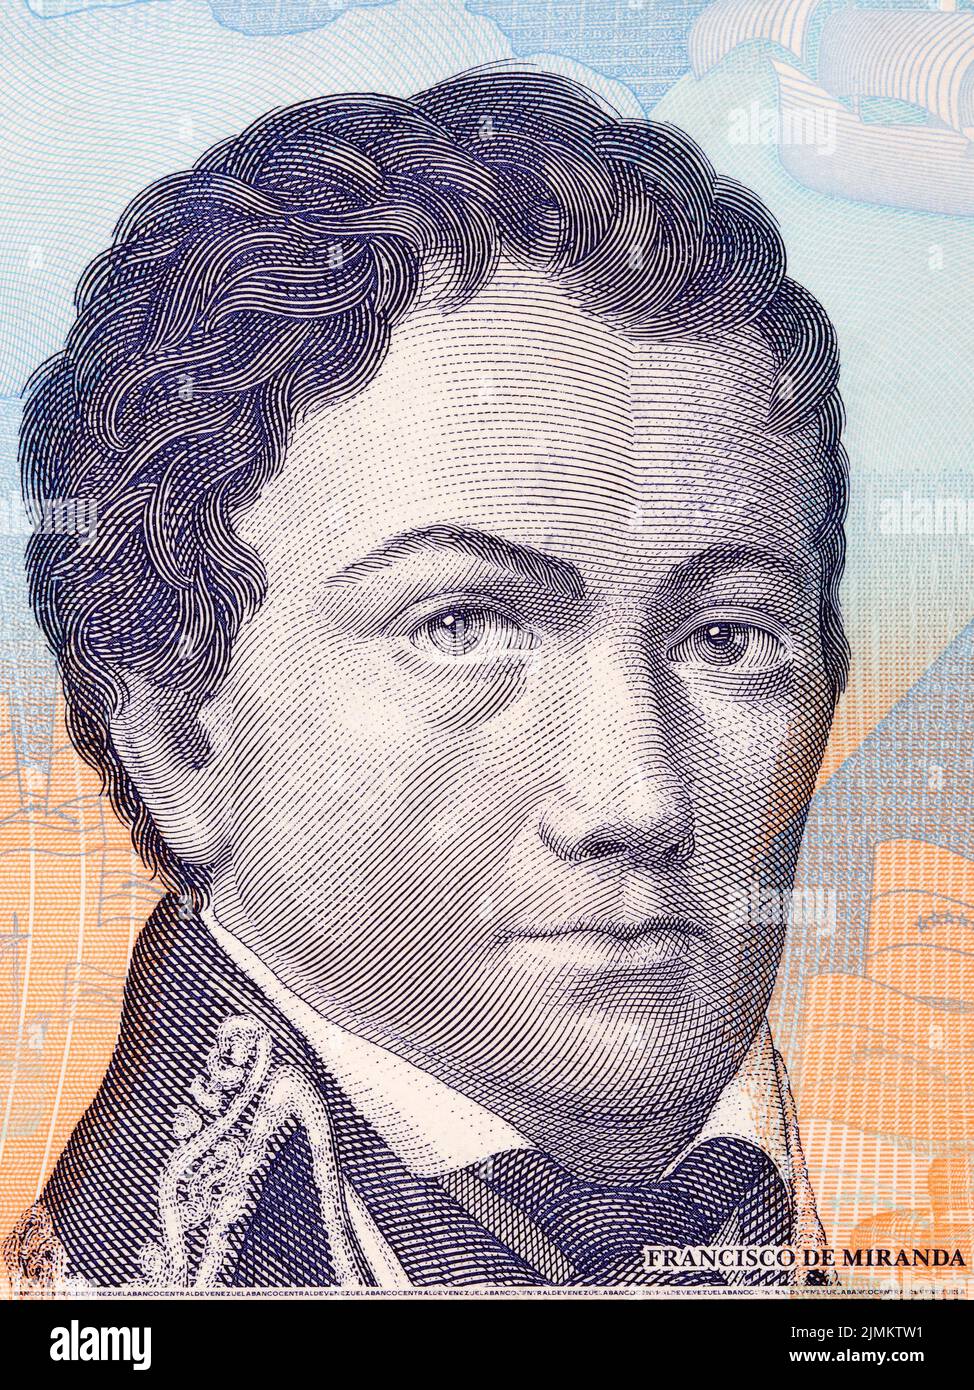 Francisco de Miranda portrait from Venezuelan money Stock Photo